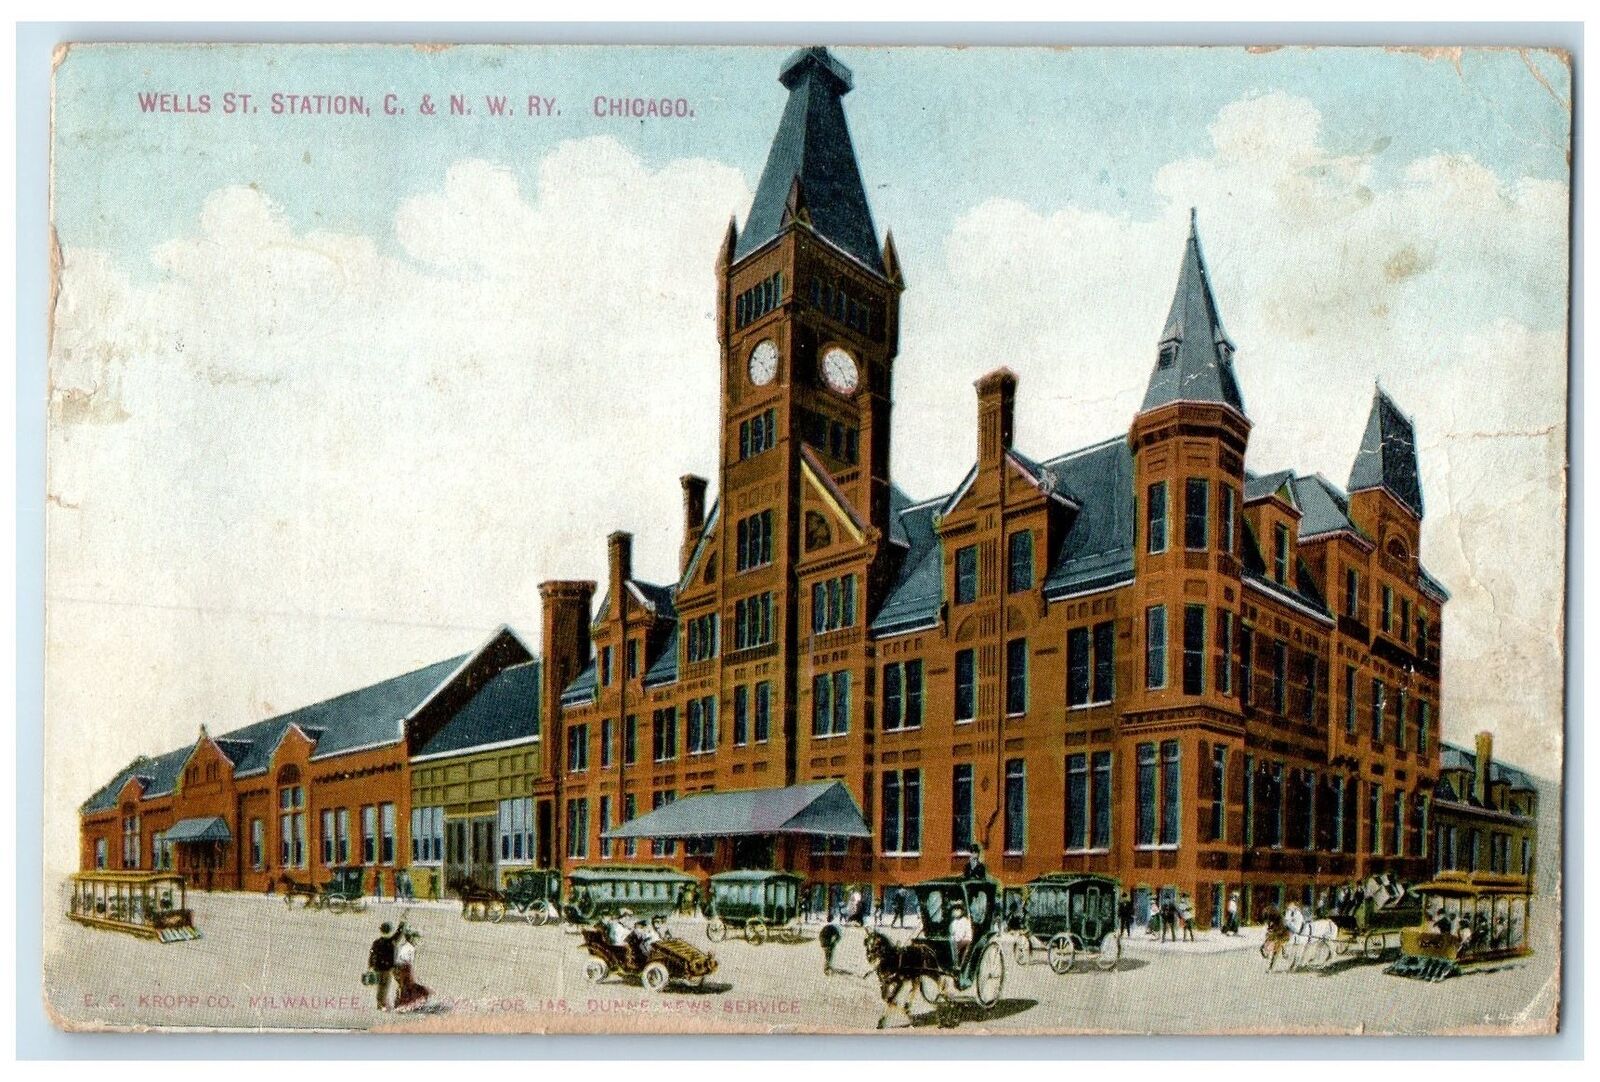 1909 Wells St. Station C & N Northwestern R Y Depot Chicago Illinois IL Postcard